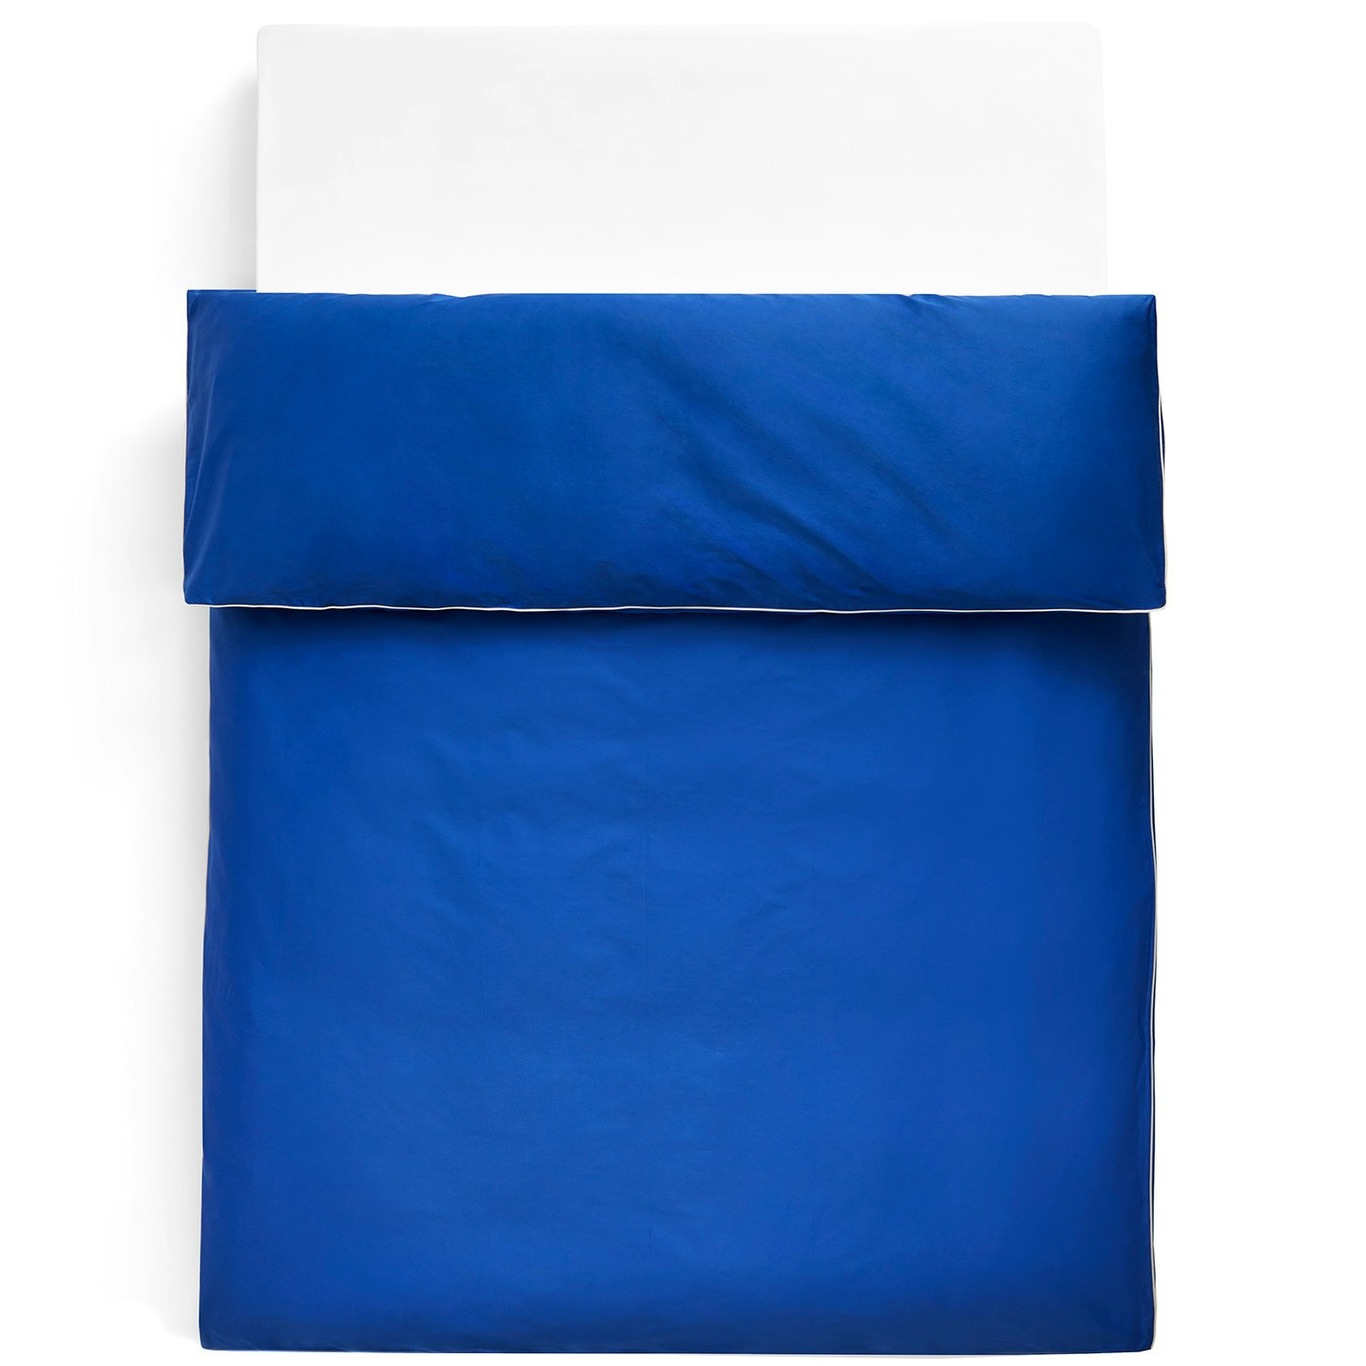 Outline Duvet Cover 200x220 cm, Vivid Blue